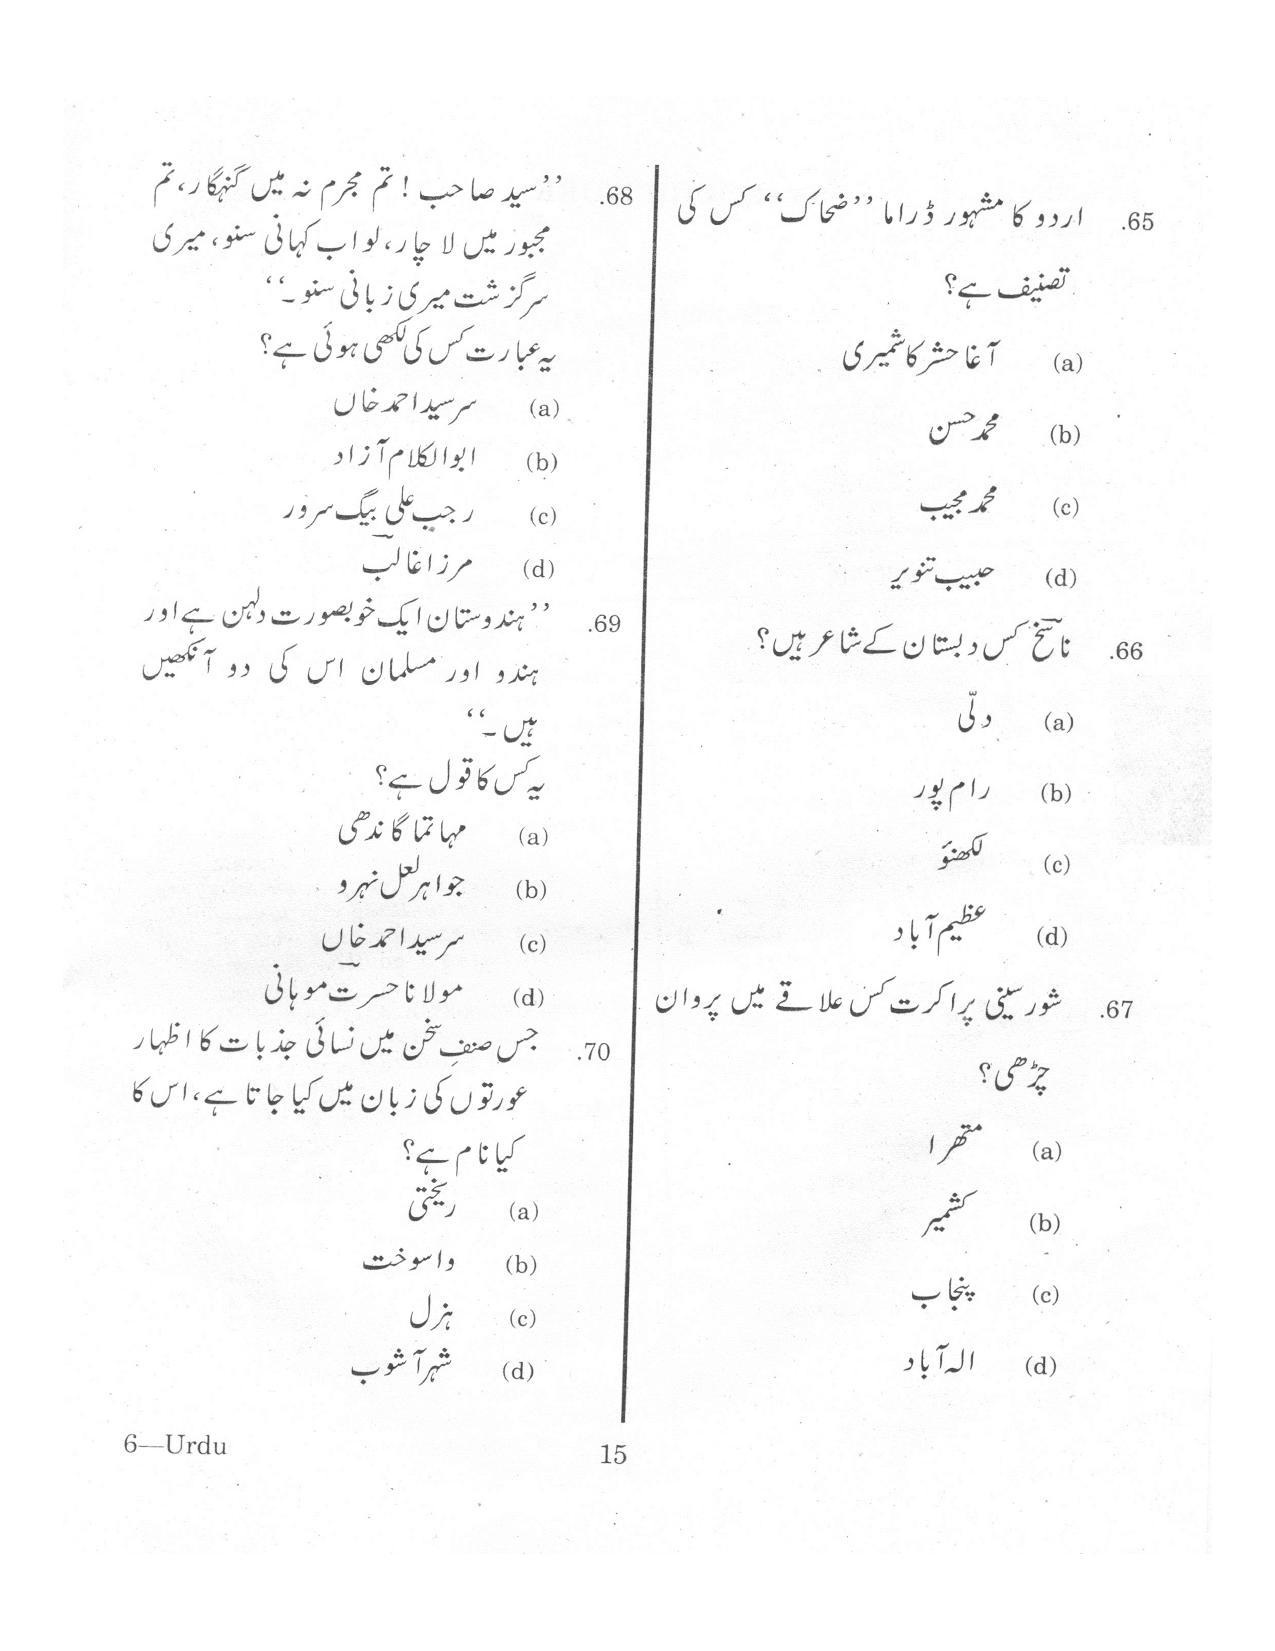 URATPG Urdu 2013 Question Paper - Page 14